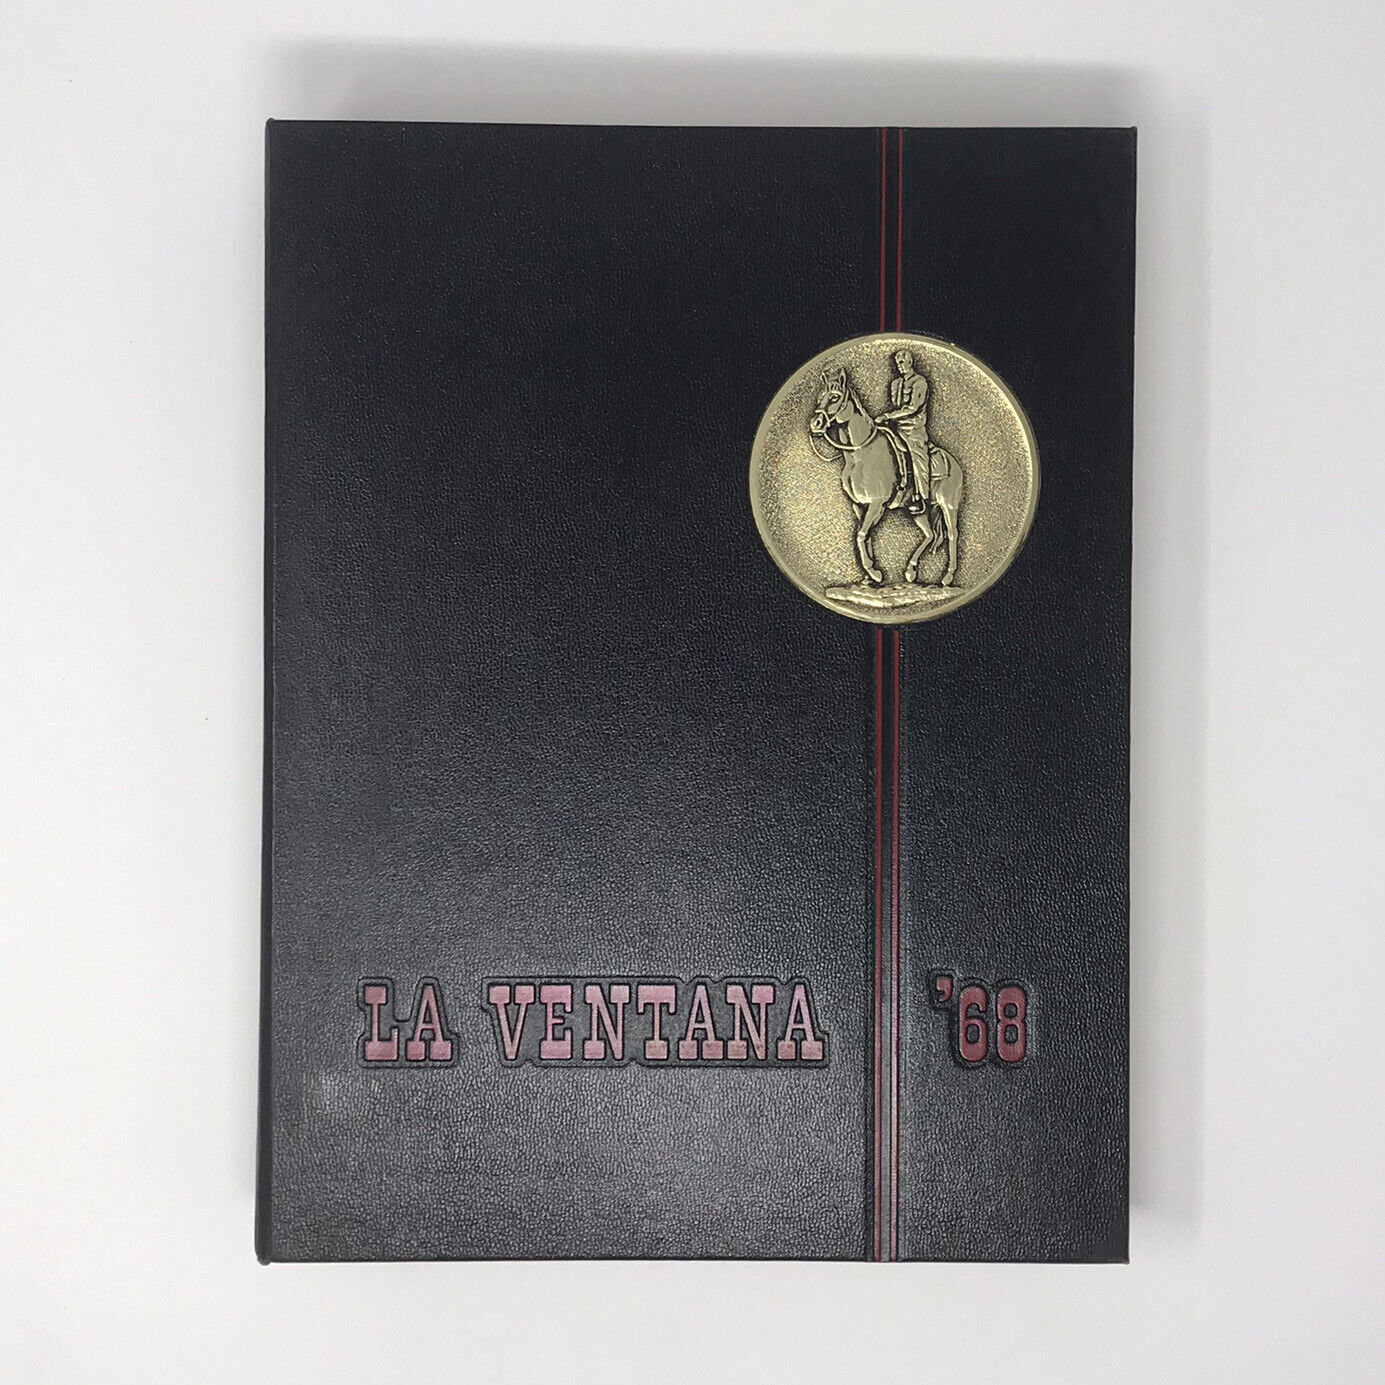 Texas Tech 1968 La Ventana Yearbook with Detroit Lions Ed Mooney NFL Volume 43